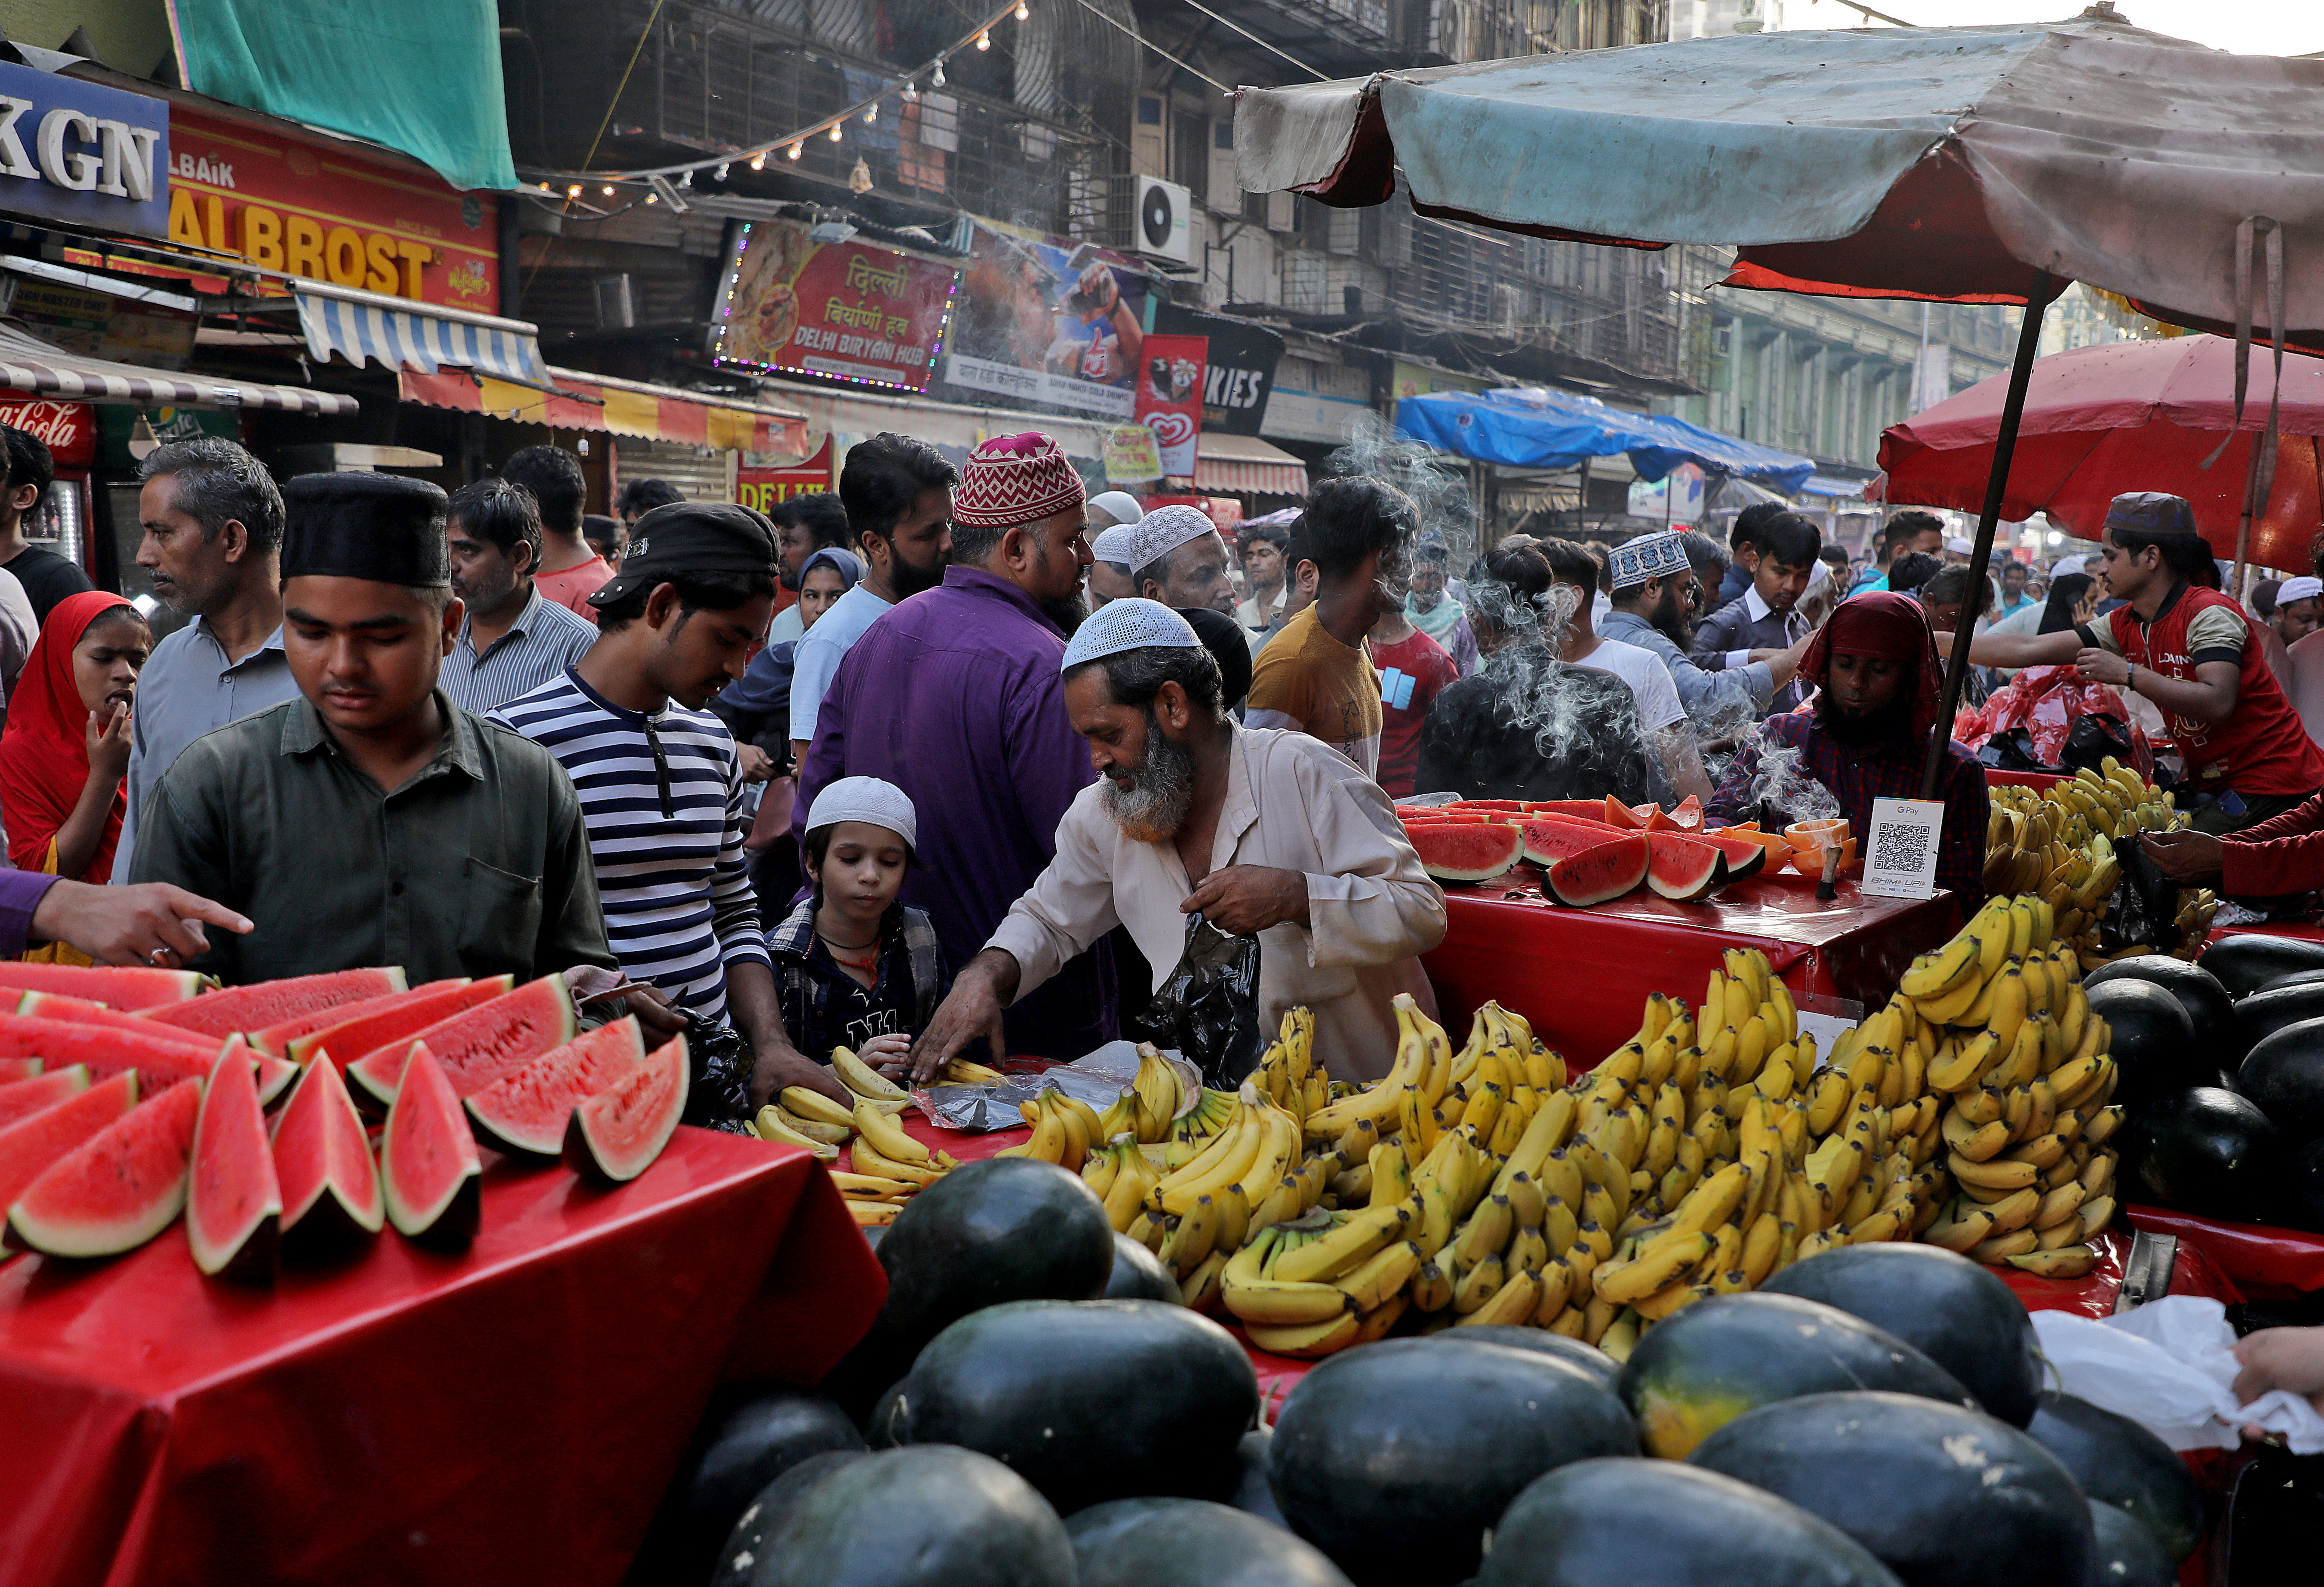 One of the hundreds of street markets in Mumbai (REUTERS / Niharika Kulkarni)